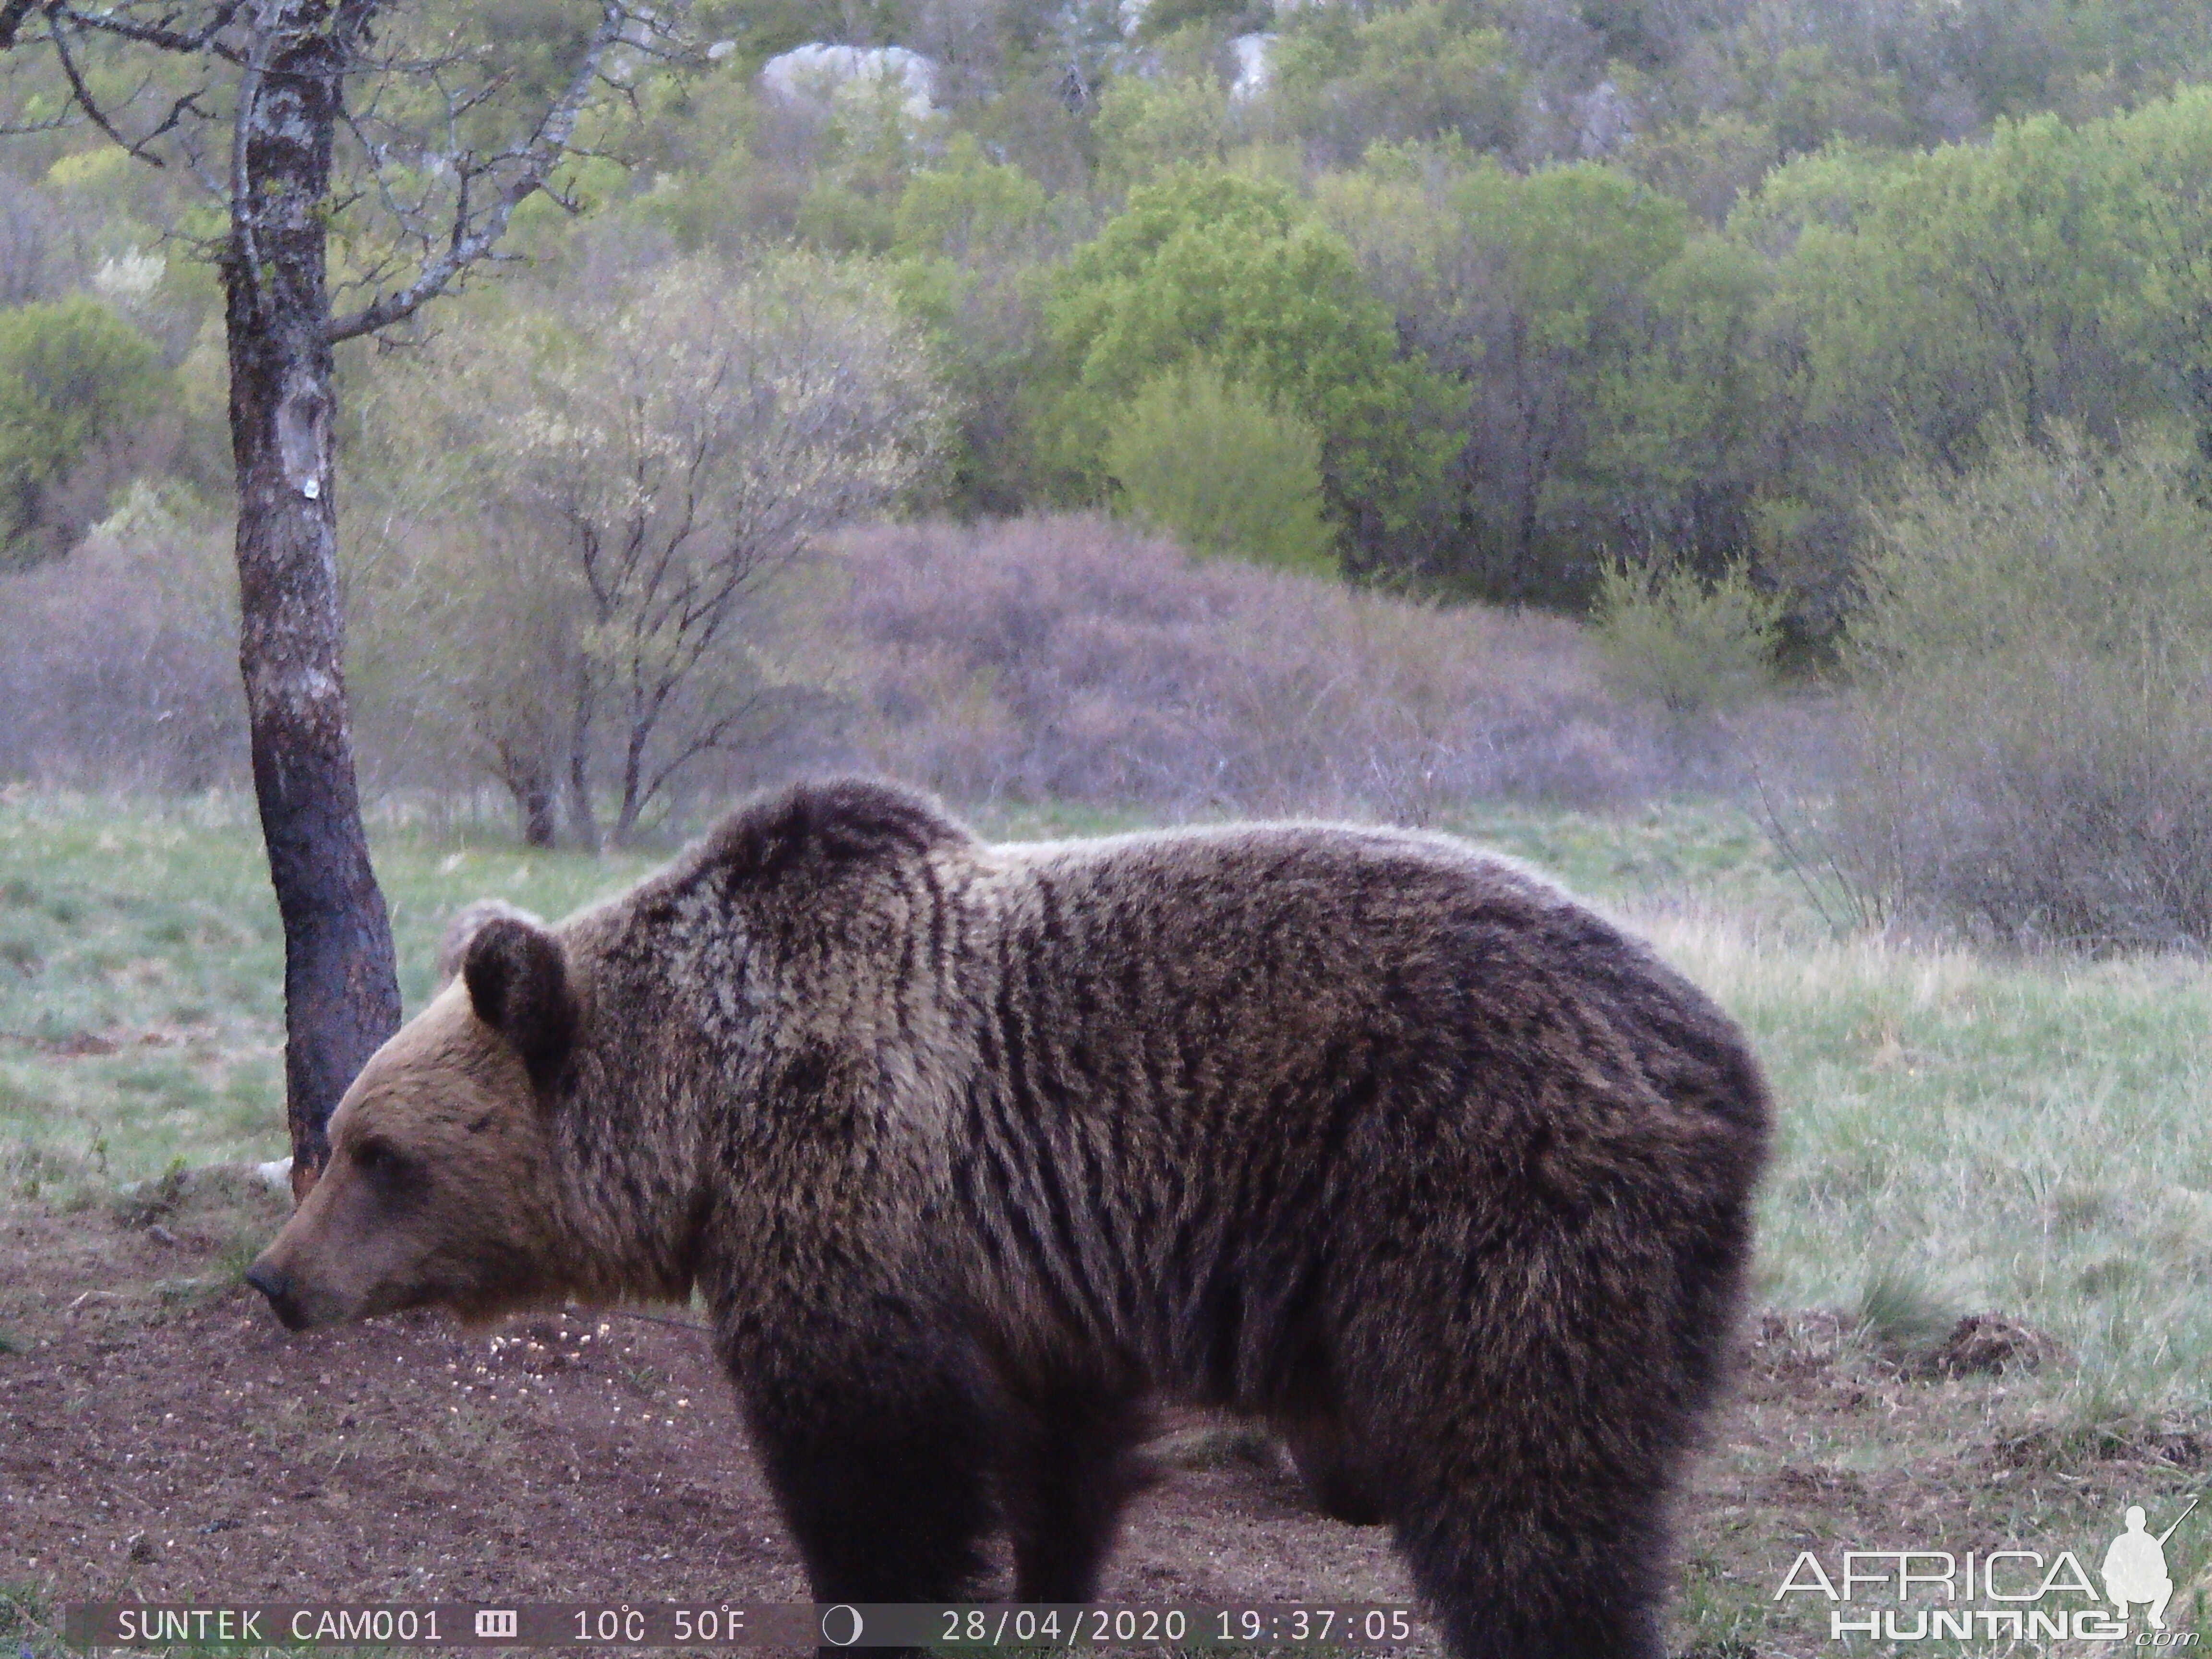 Croatia Europe Trail Cam Pictures Bear